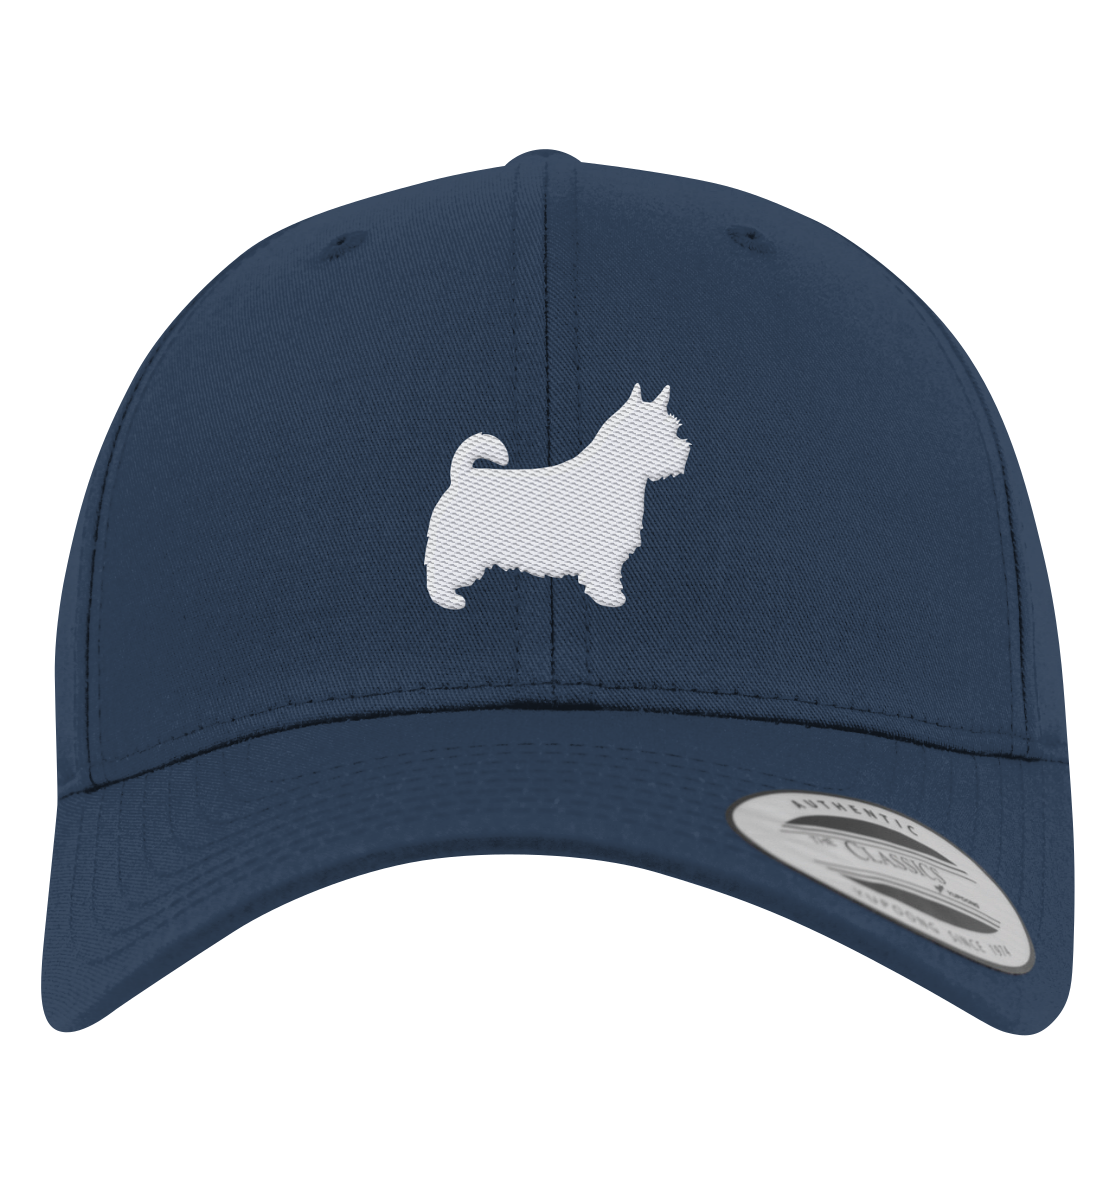 Norwich Terrier-Silhouette - Premium Baseball Cap